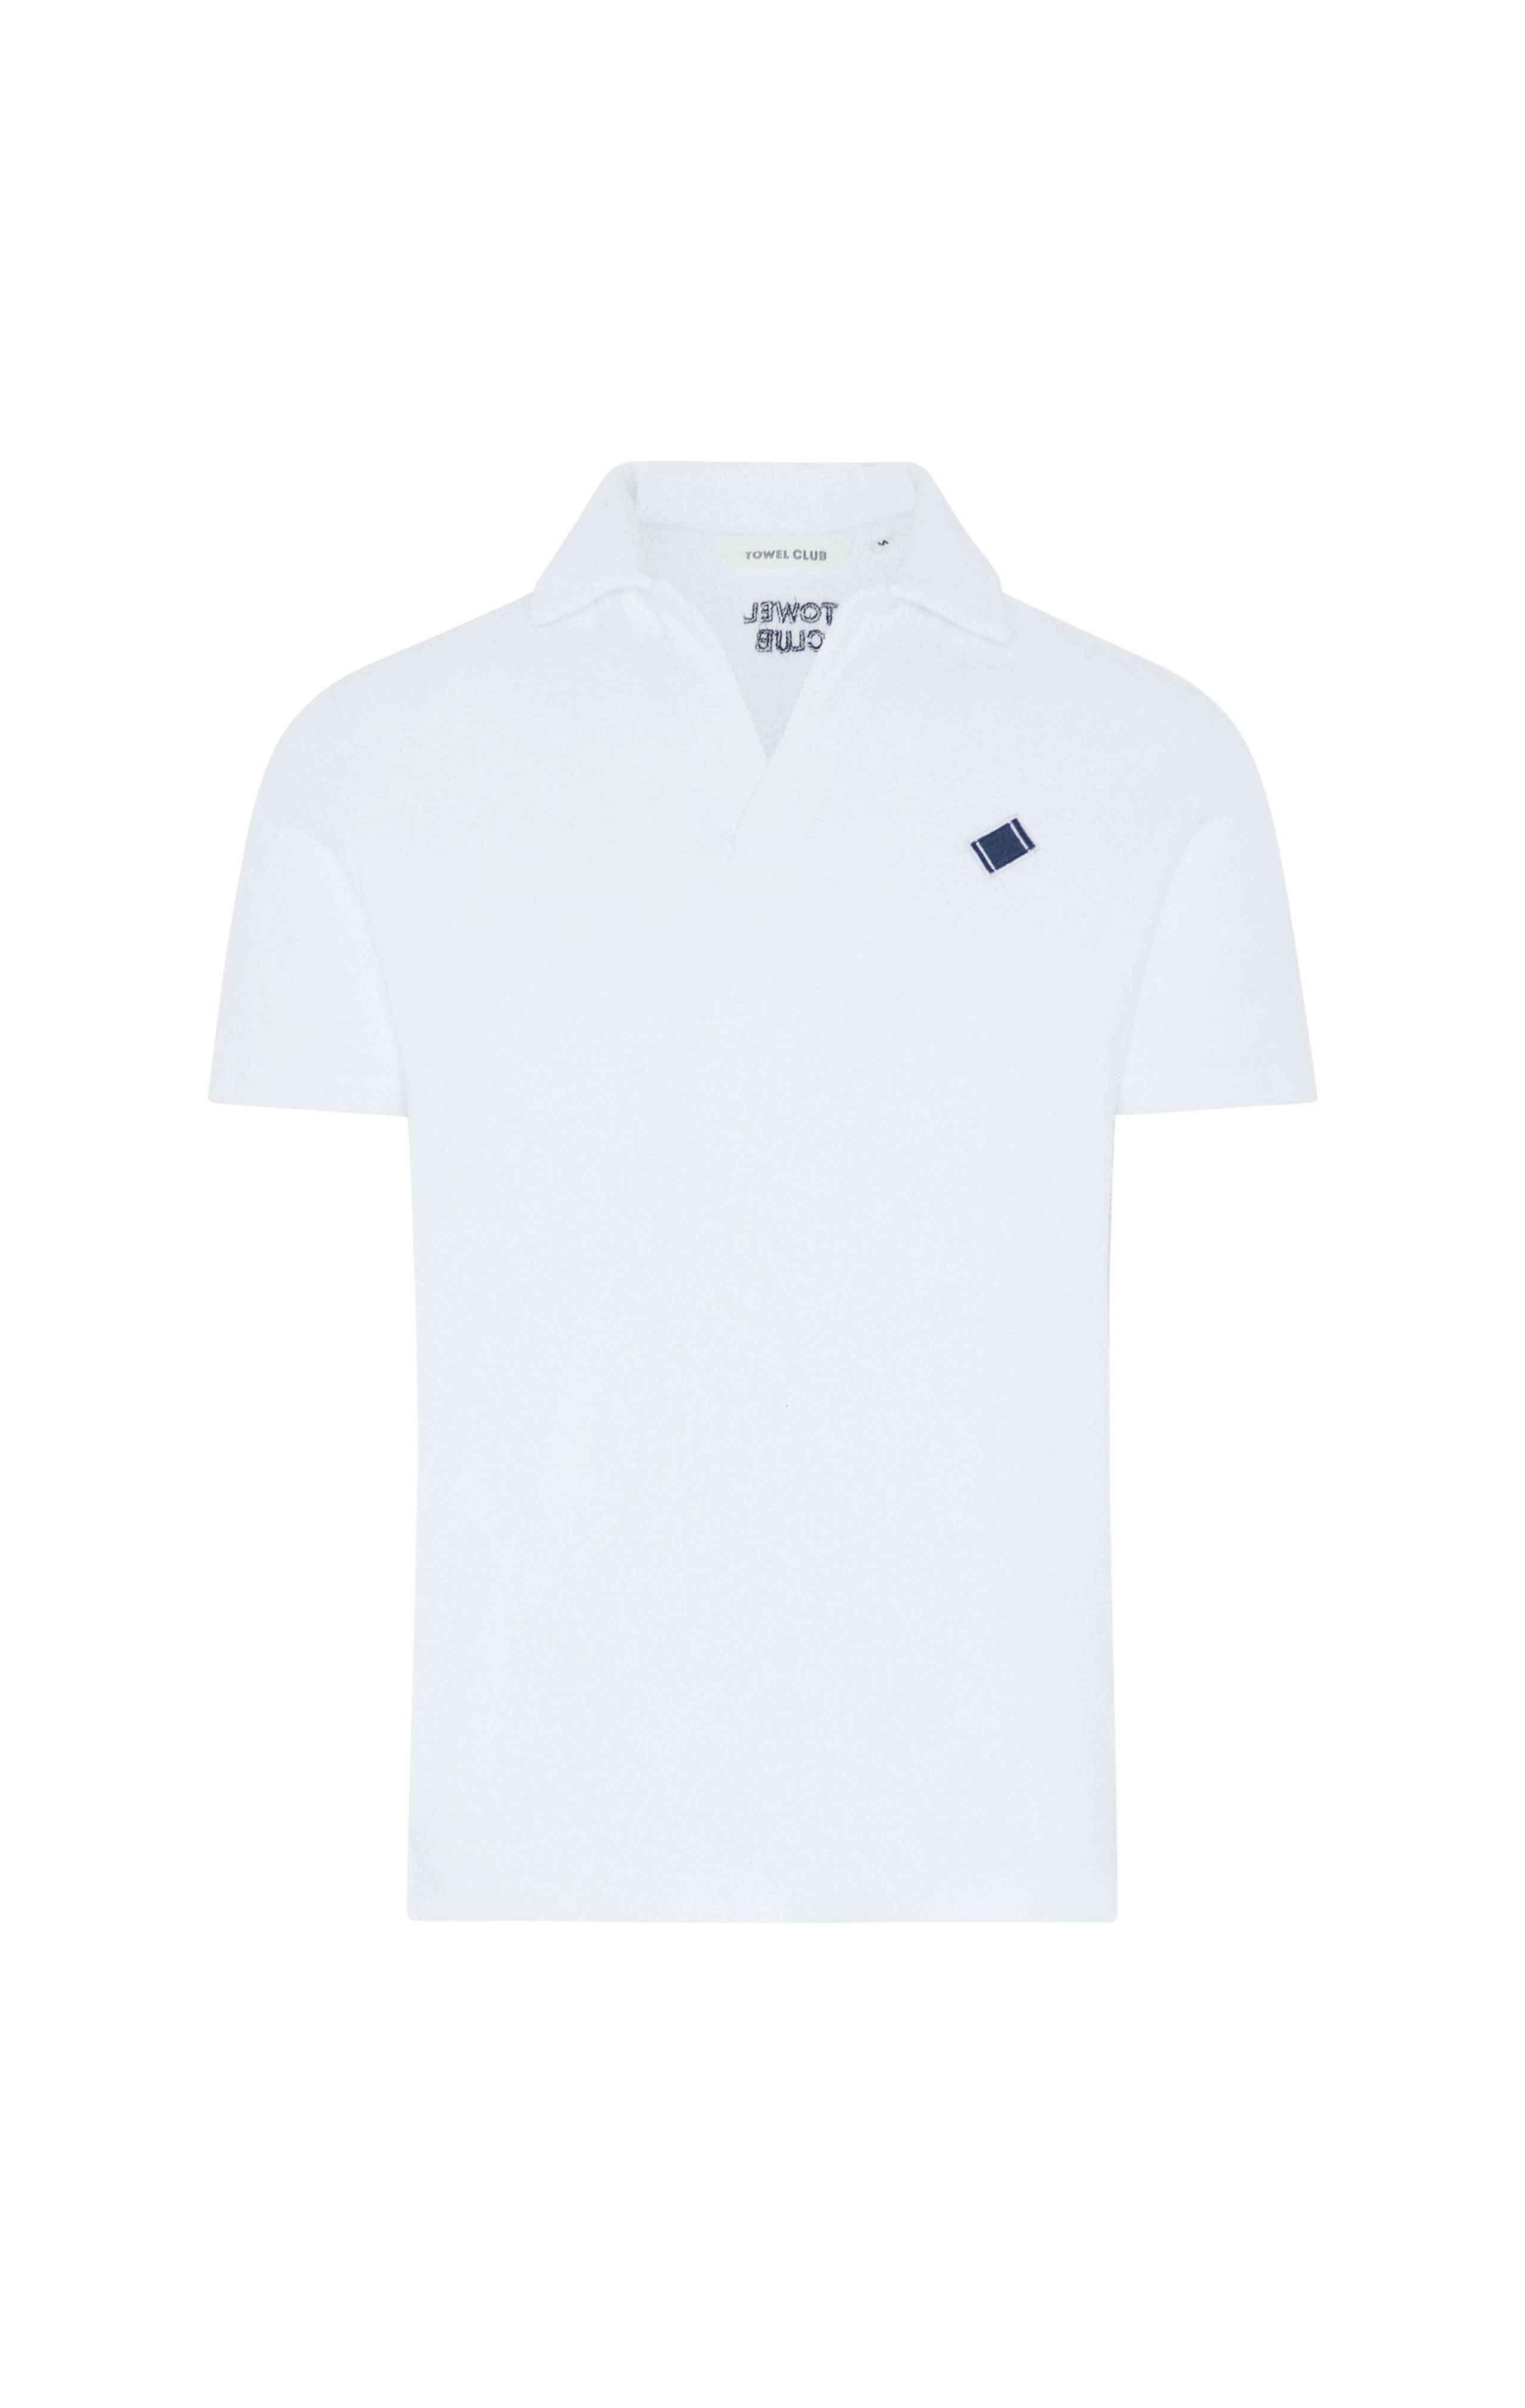 Onepiece Towel Club Piquet Shirt White - 1